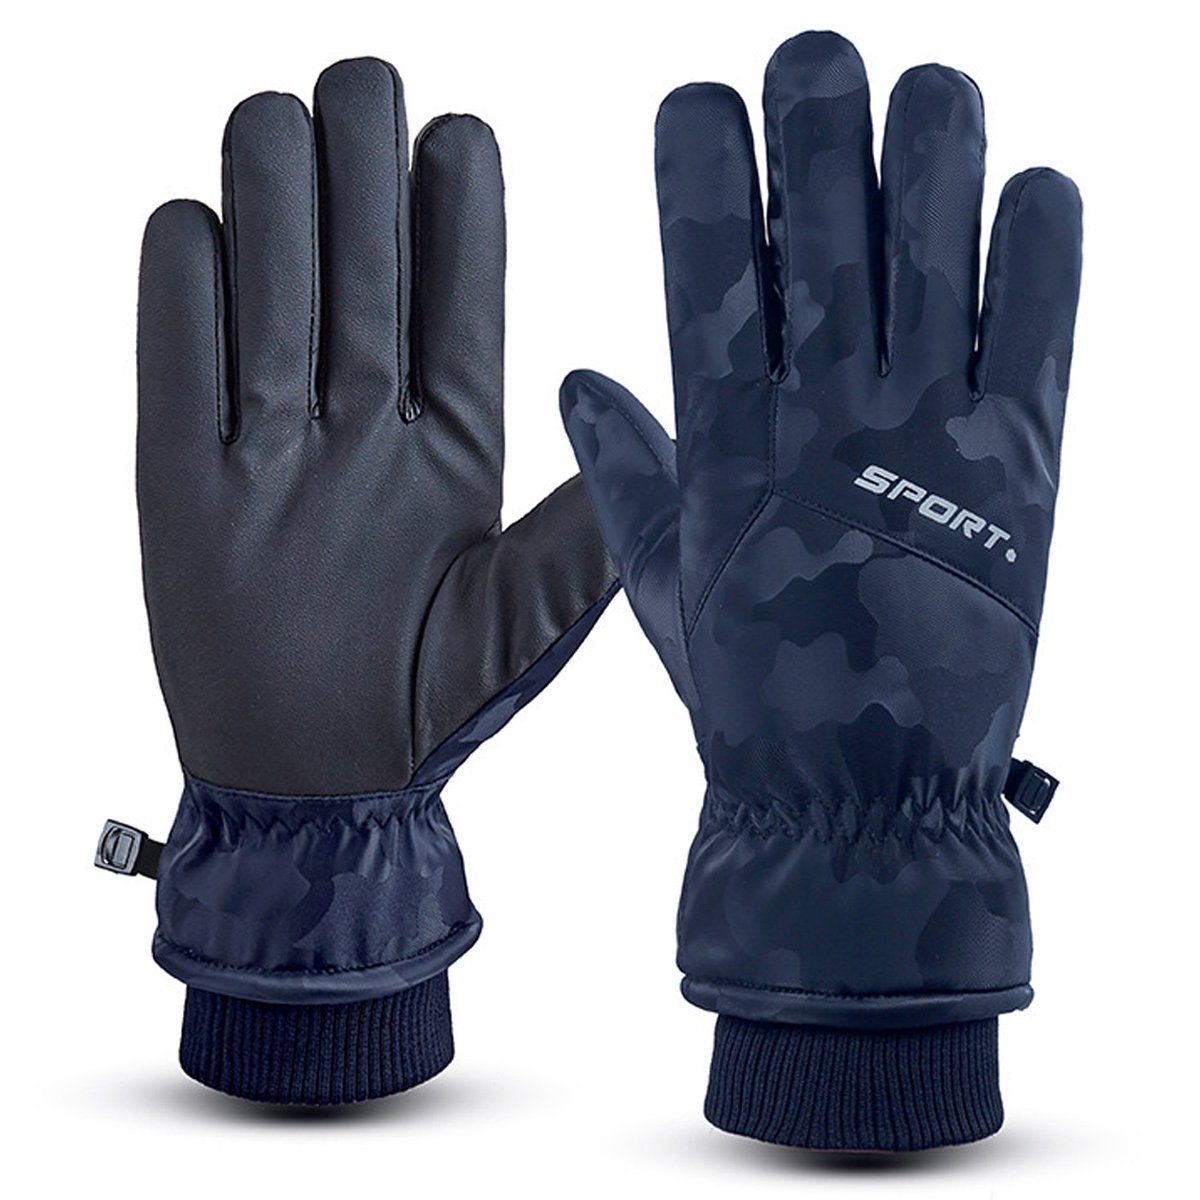 ZmdecQna Skihandschuhe Skihandschuhe Winter Handschuhe Warm Snowboard Handschuhe Blau